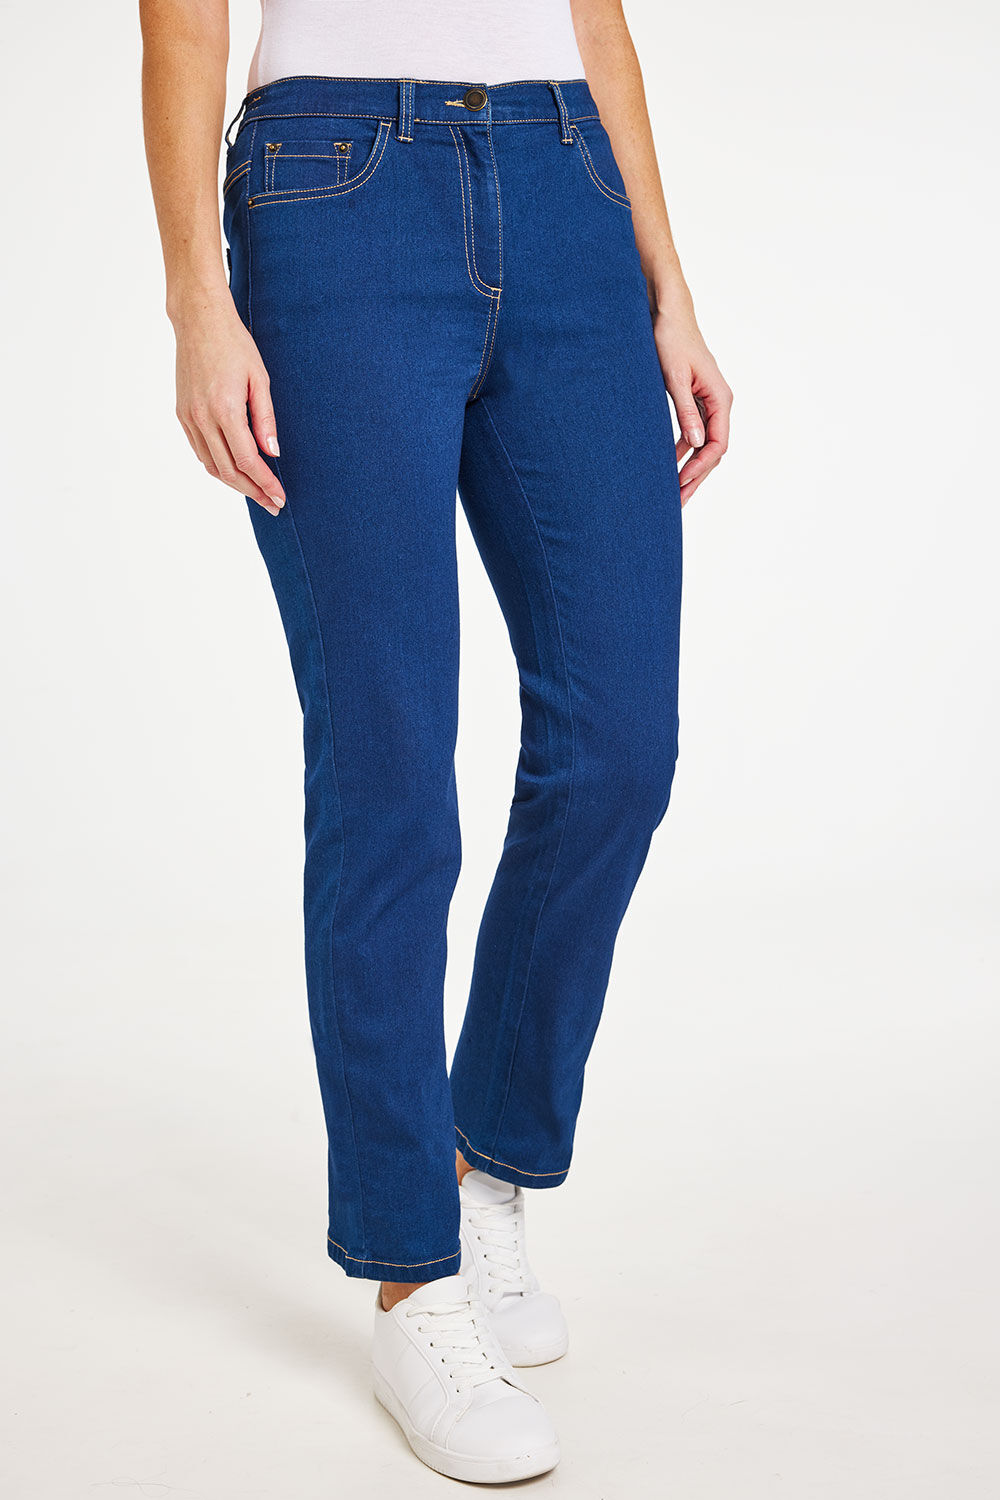 Bonmarche Women’s Navy Blue Cotton The SARA Straight Leg Jeans, Size: 10